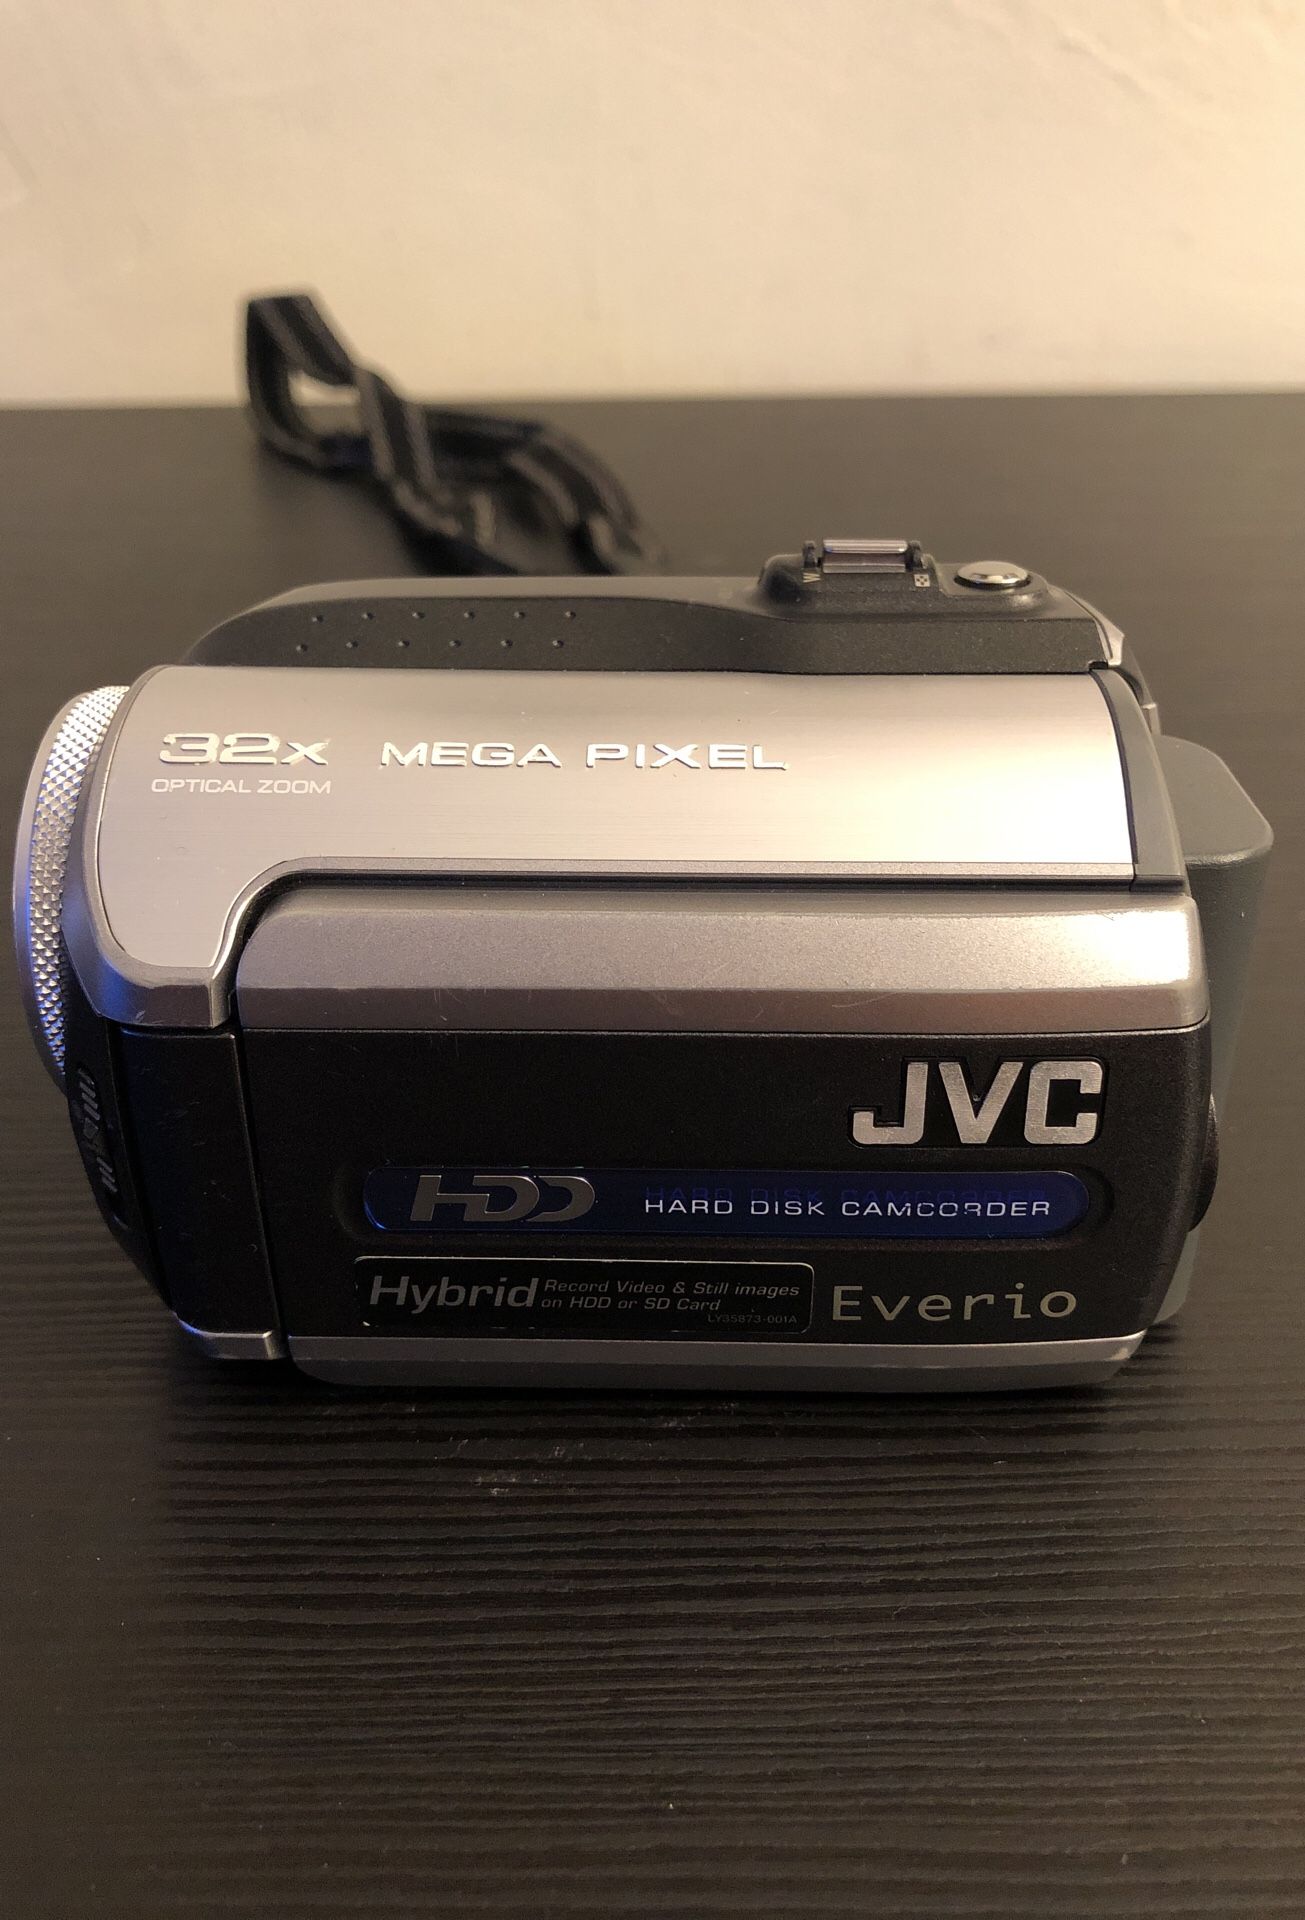 JVC Camcorder